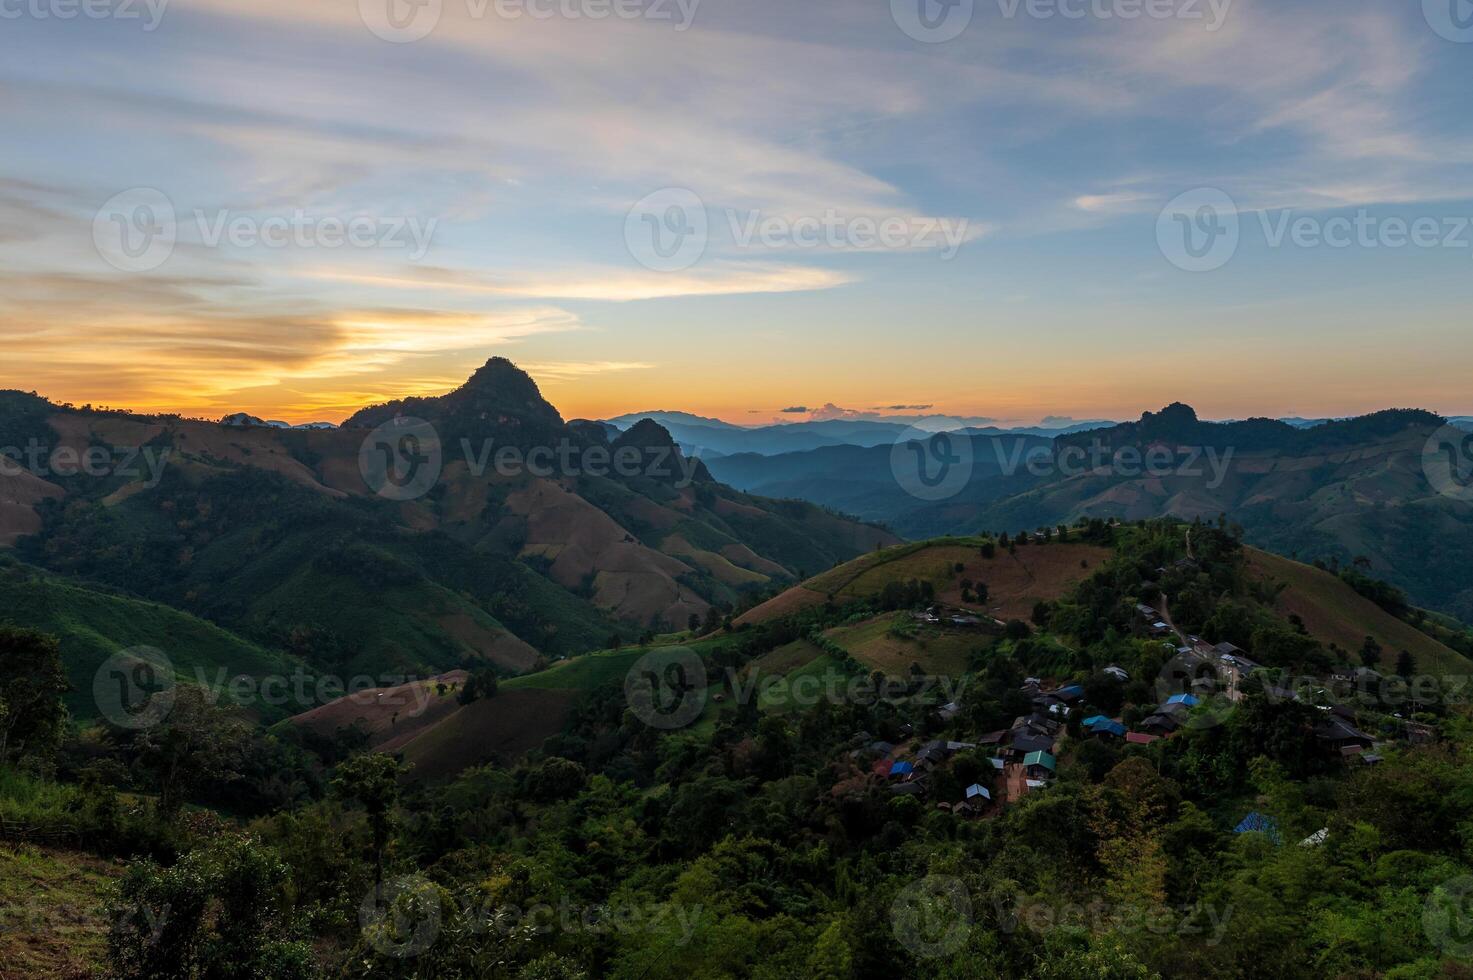 klein dorp Aan bergen na zonsondergang Bij ki ko kor gezichtspunt, mae hong zoon, Thailand foto